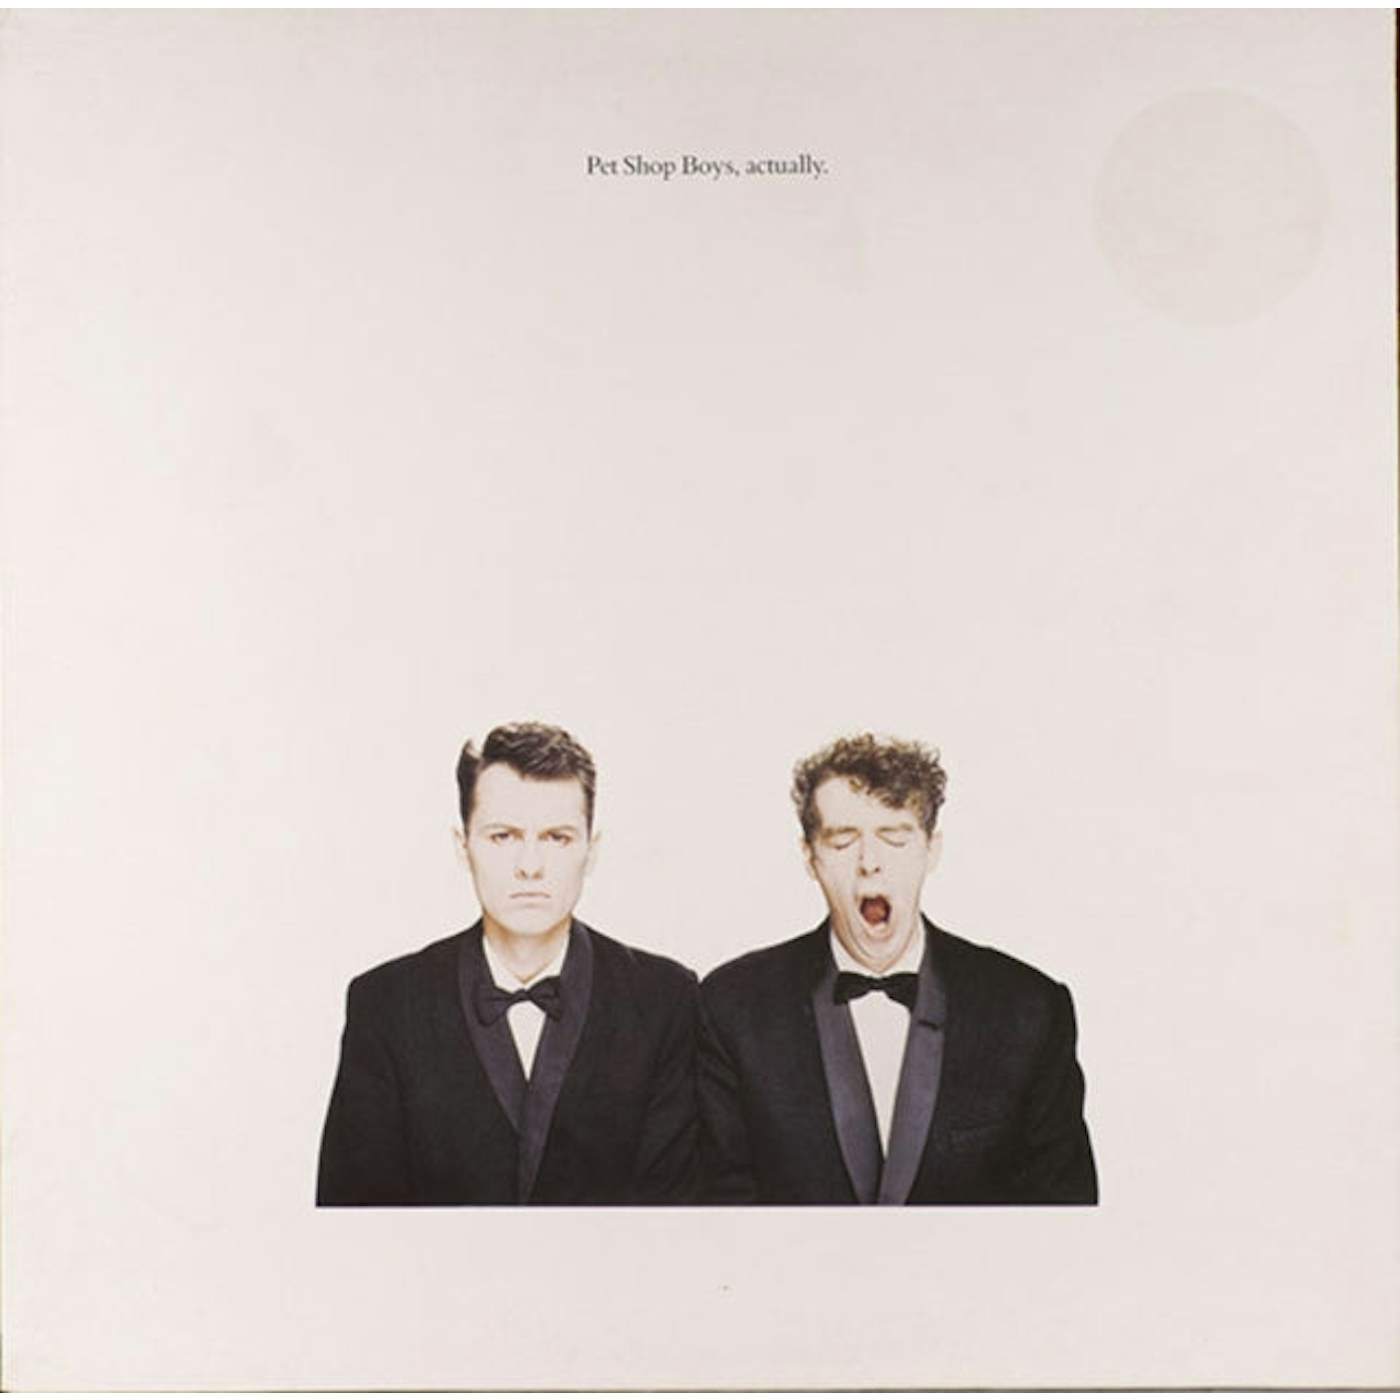 Pet Shop Boys LP Vinyl Record - Actually (20. 18  Remastered Version)